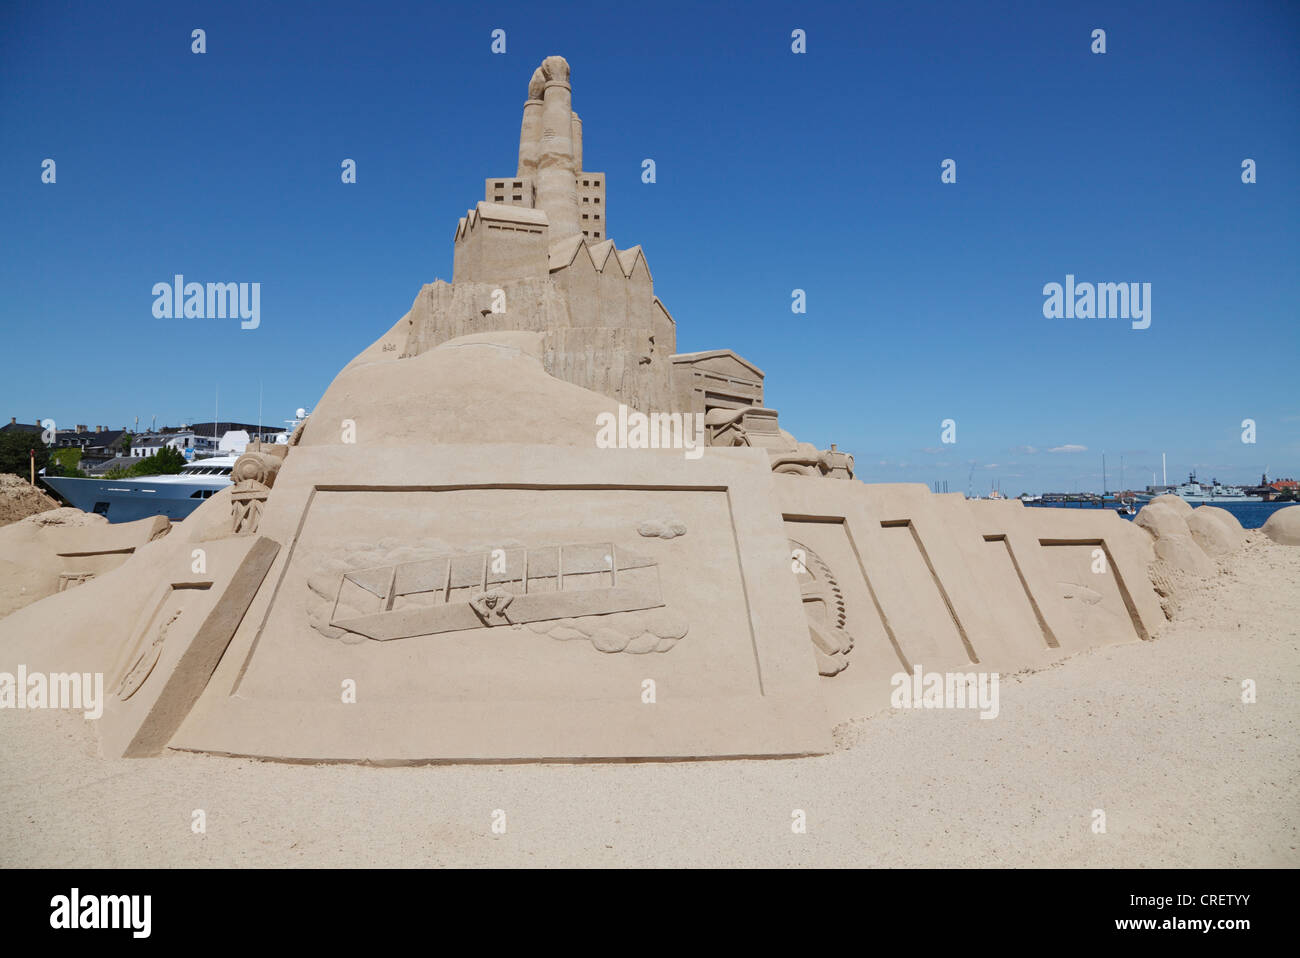 https://c8.alamy.com/comp/CRETYY/copenhagen-international-sand-sculpture-festival-2012-the-industrial-CRETYY.jpg